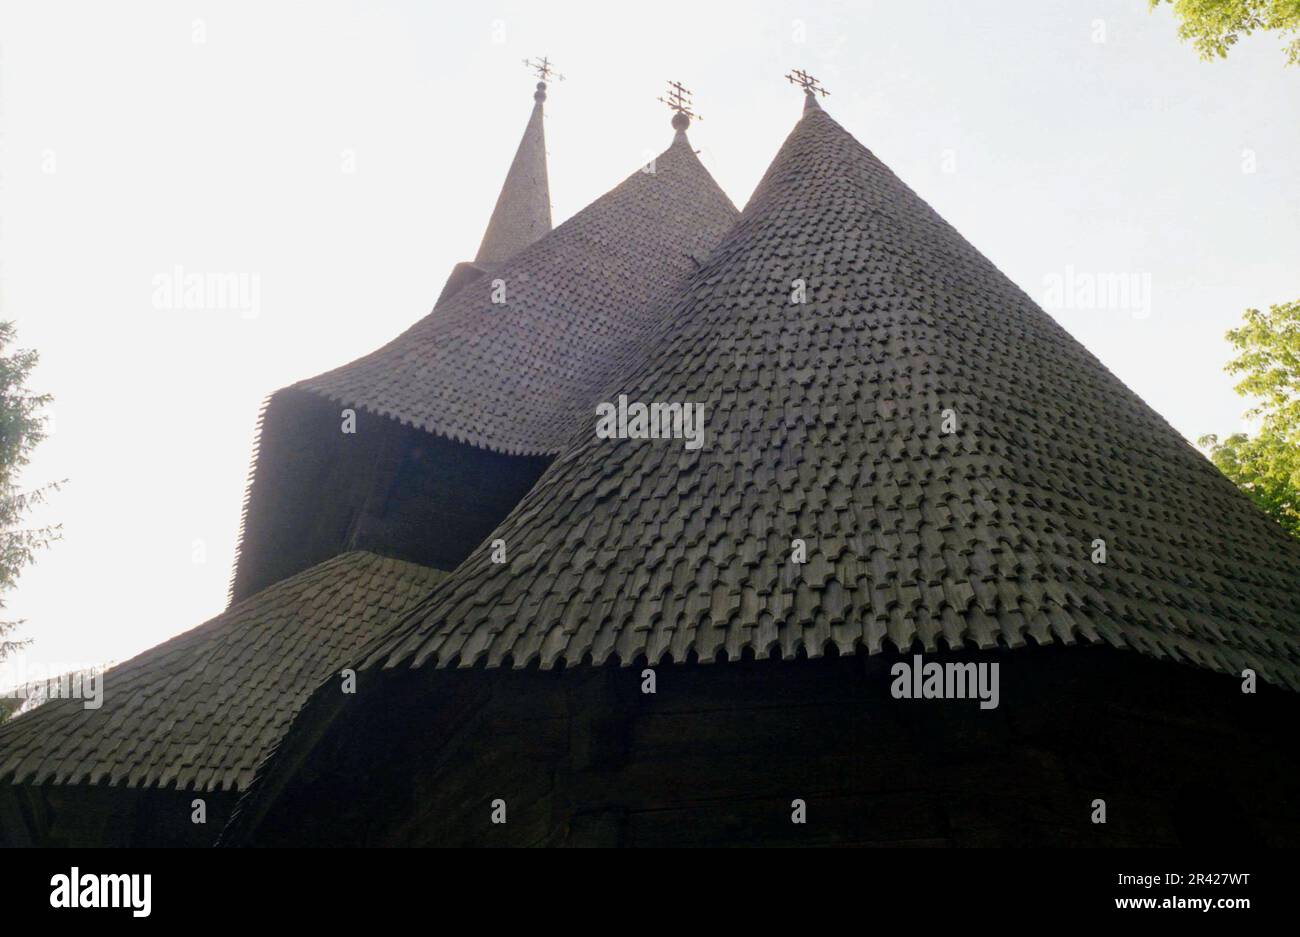 Desești, Condado de Maramures, Rumania, 2001. Vista exterior de la iglesia ortodoxa cristiana de madera, un monumento histórico del siglo XVIII. Vista del techo de madera tradicional. Foto de stock